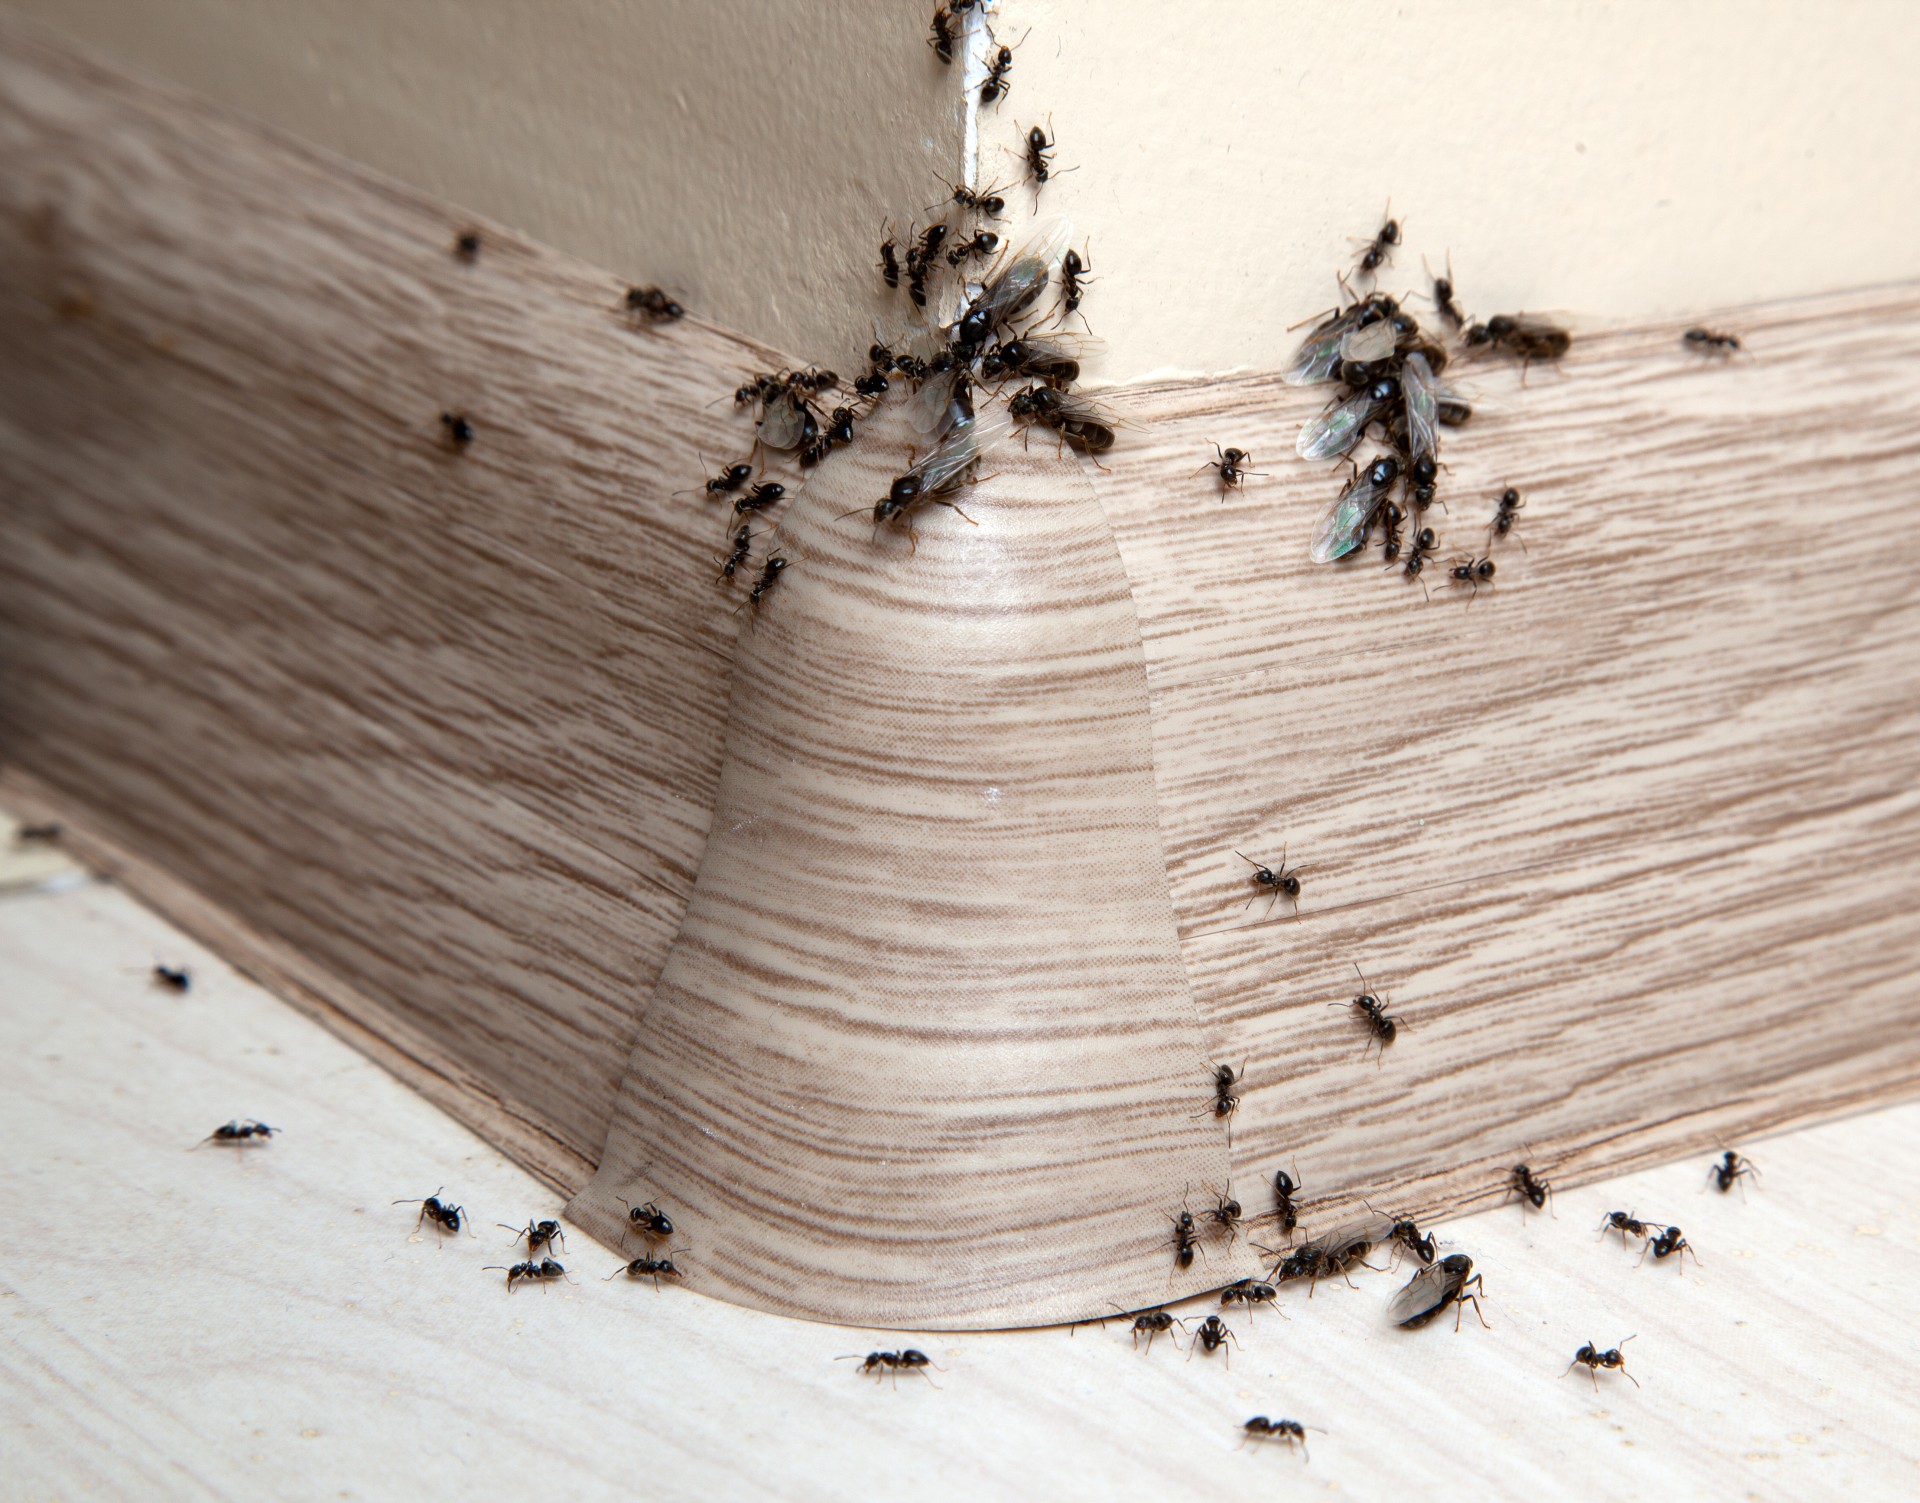 Ant Infestation, Pest Control in Rainham, RM13. Call Now 020 8166 9746